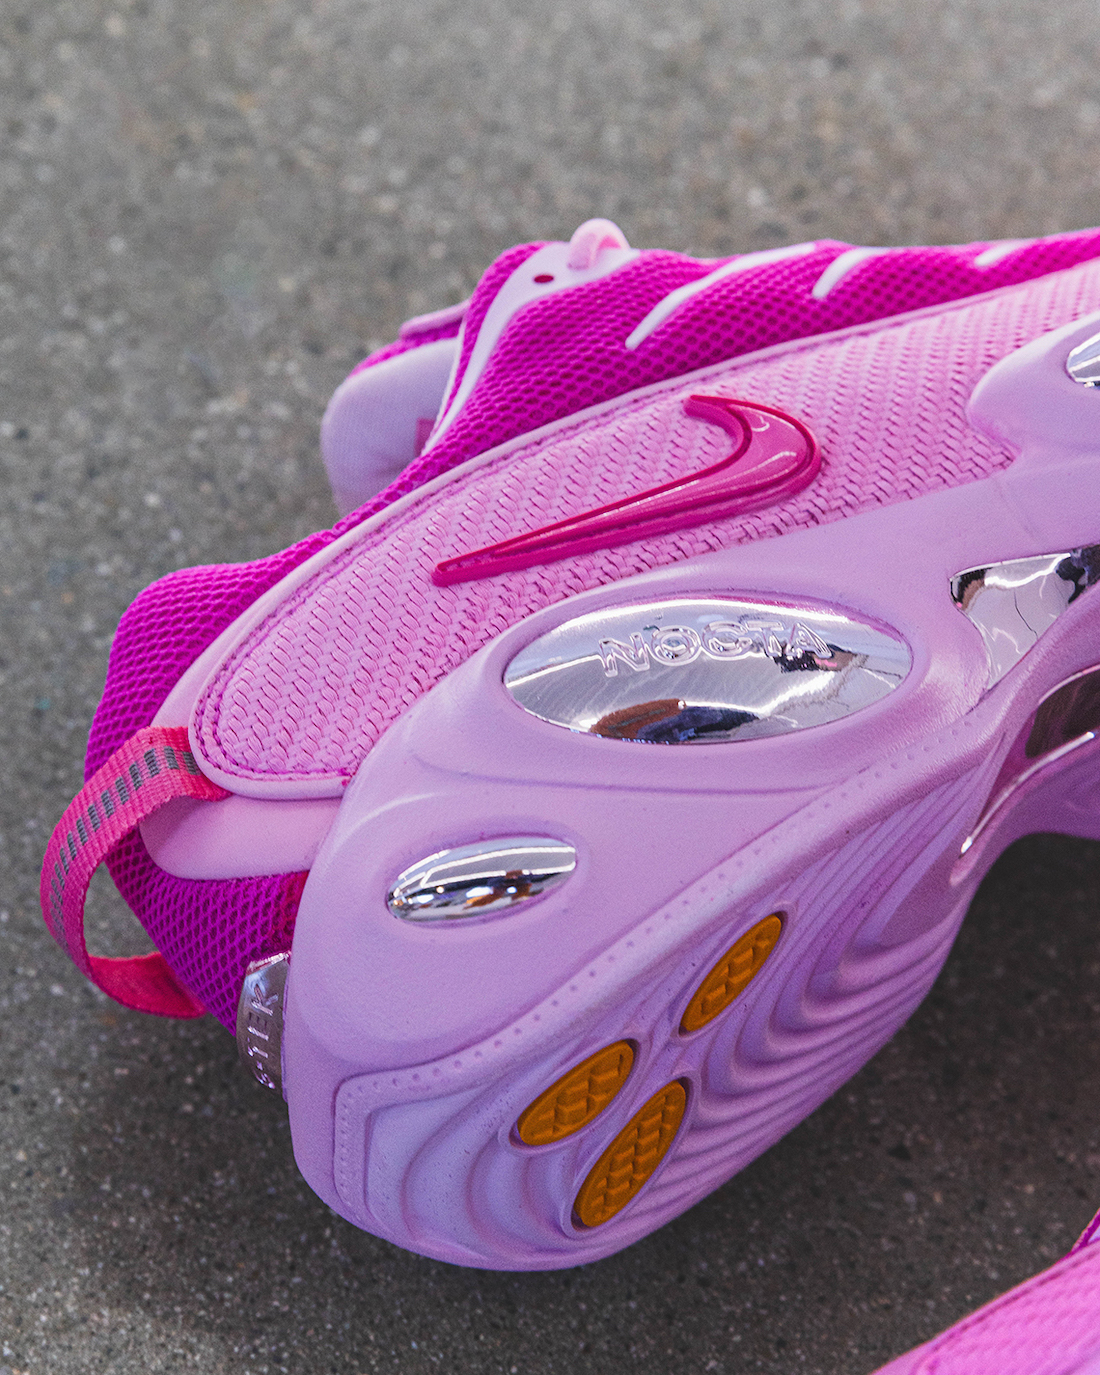 Drake's Nike NOCTA Glide Pink Custom by The Shoe Surgeon